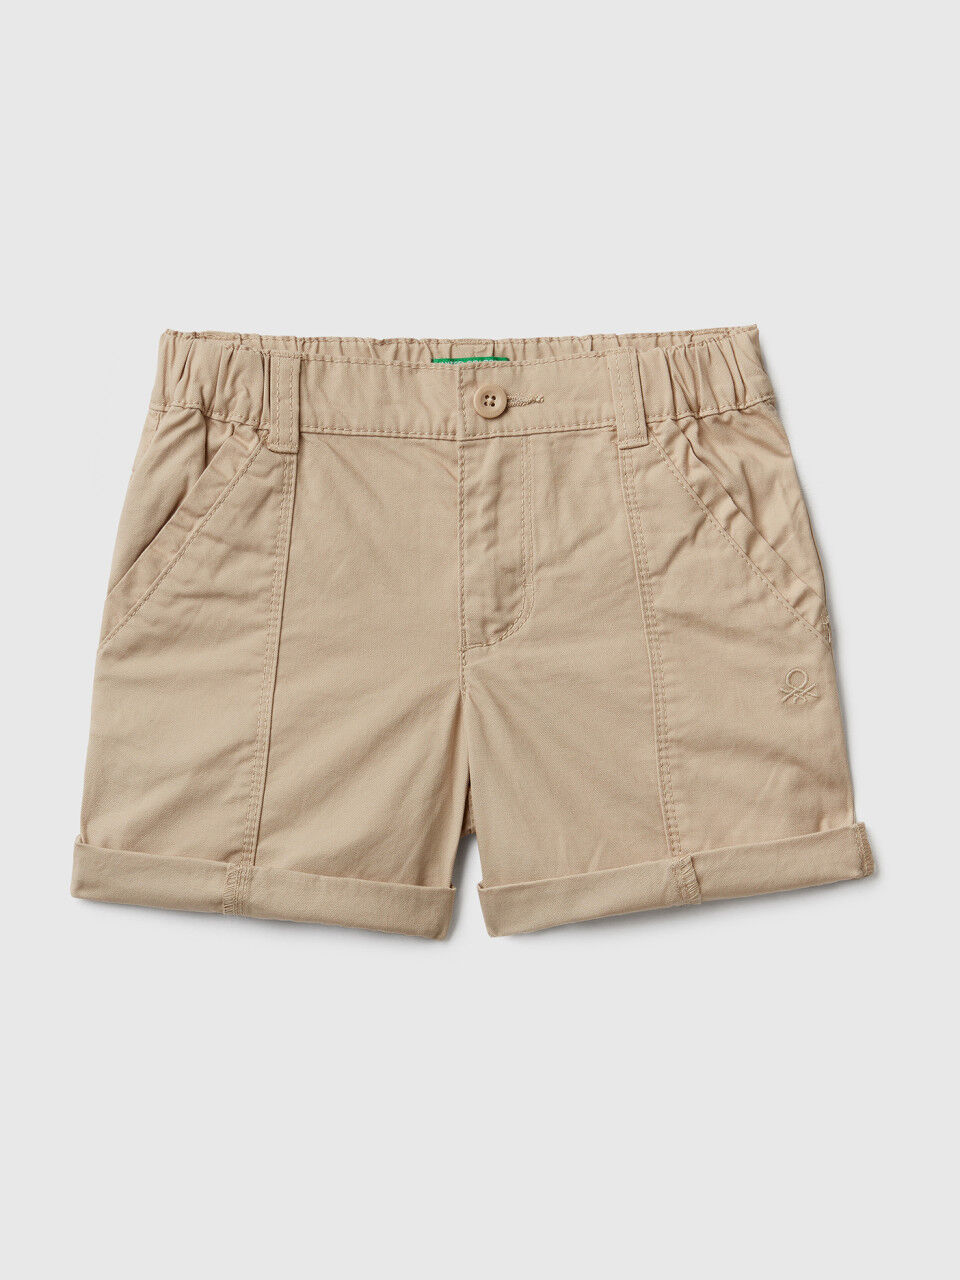 Shorts in lightweight cotton